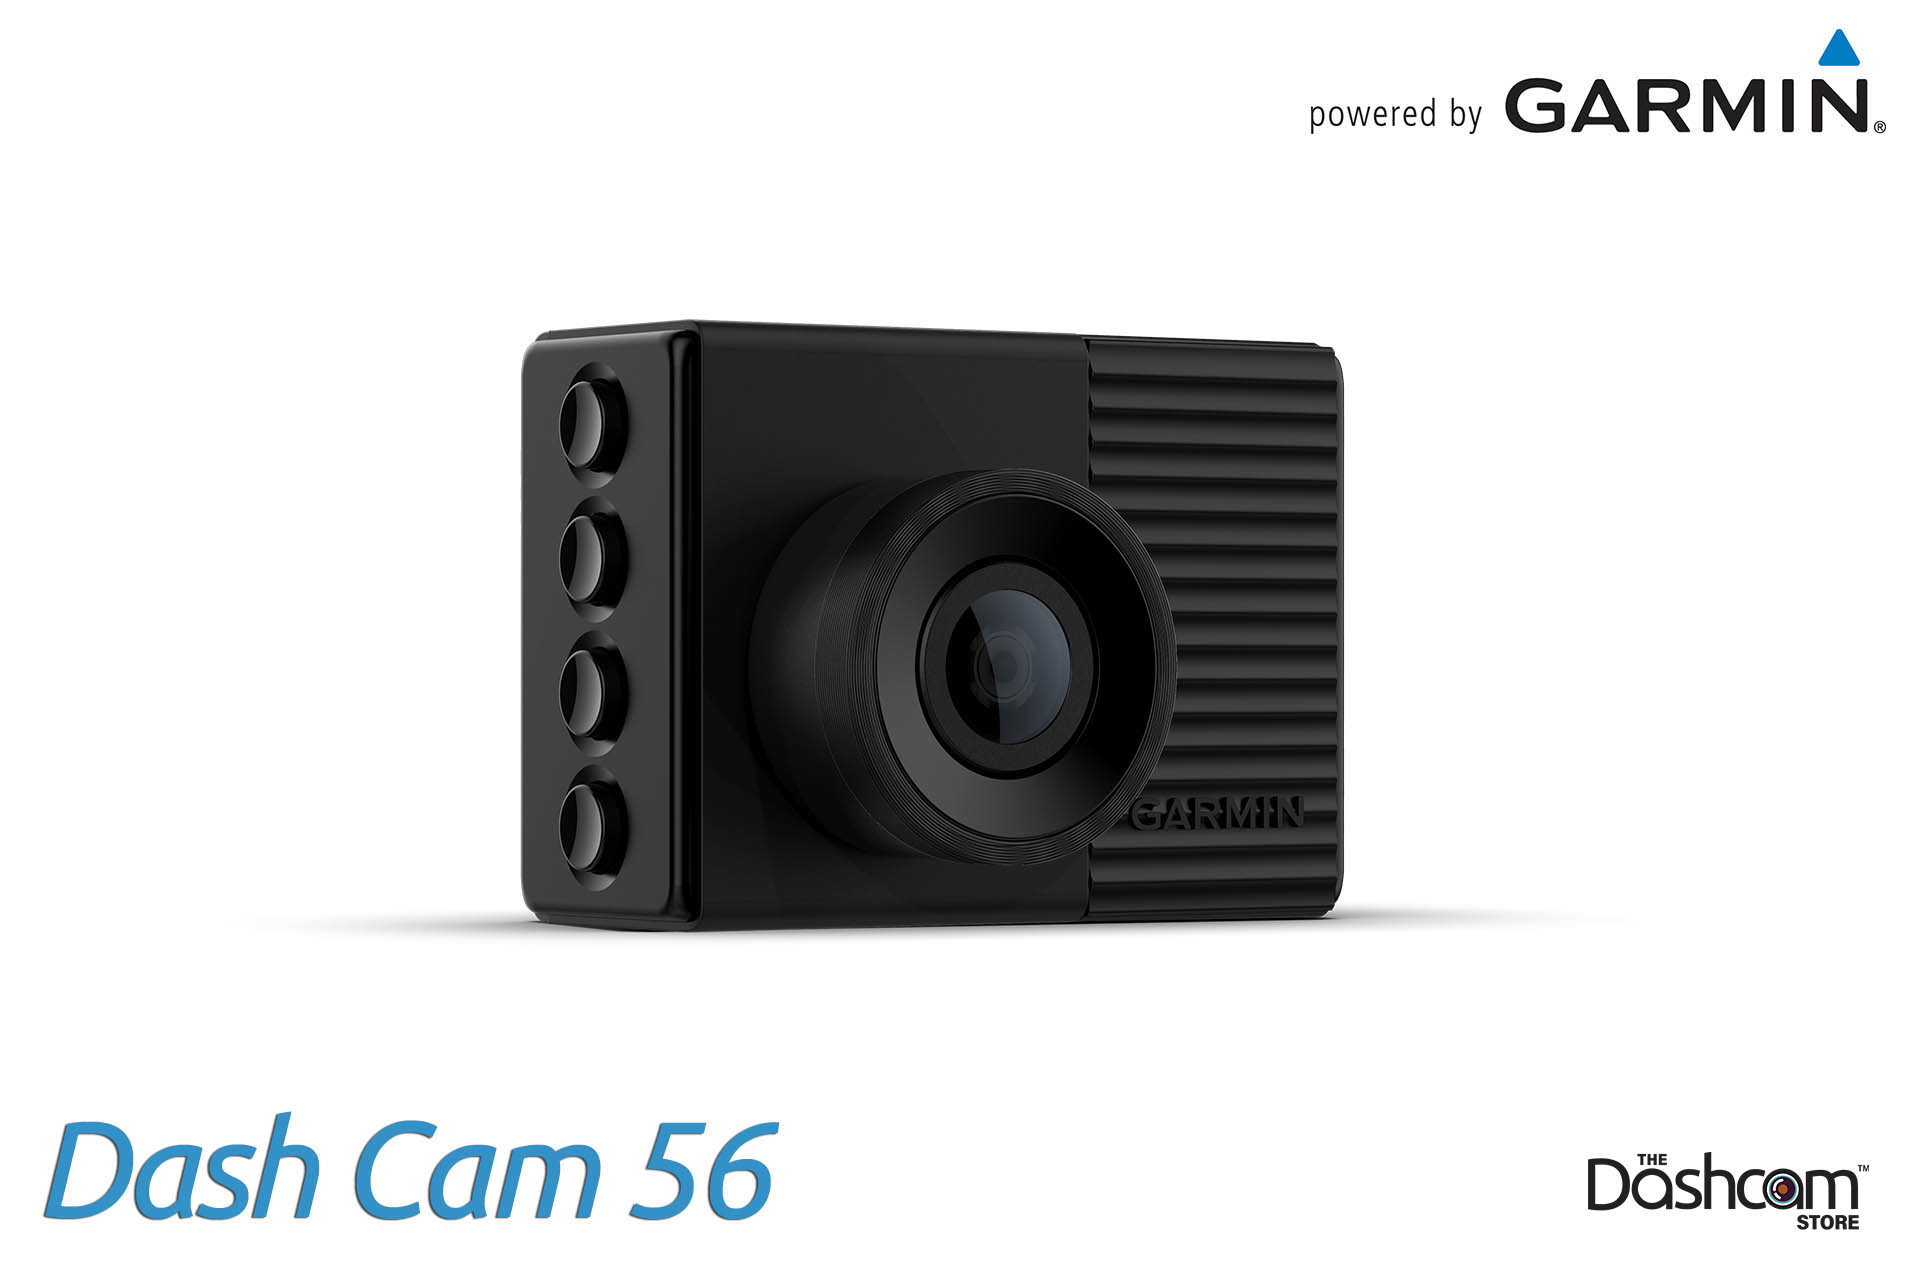 Garmin Dash Cam™ 57 – New World